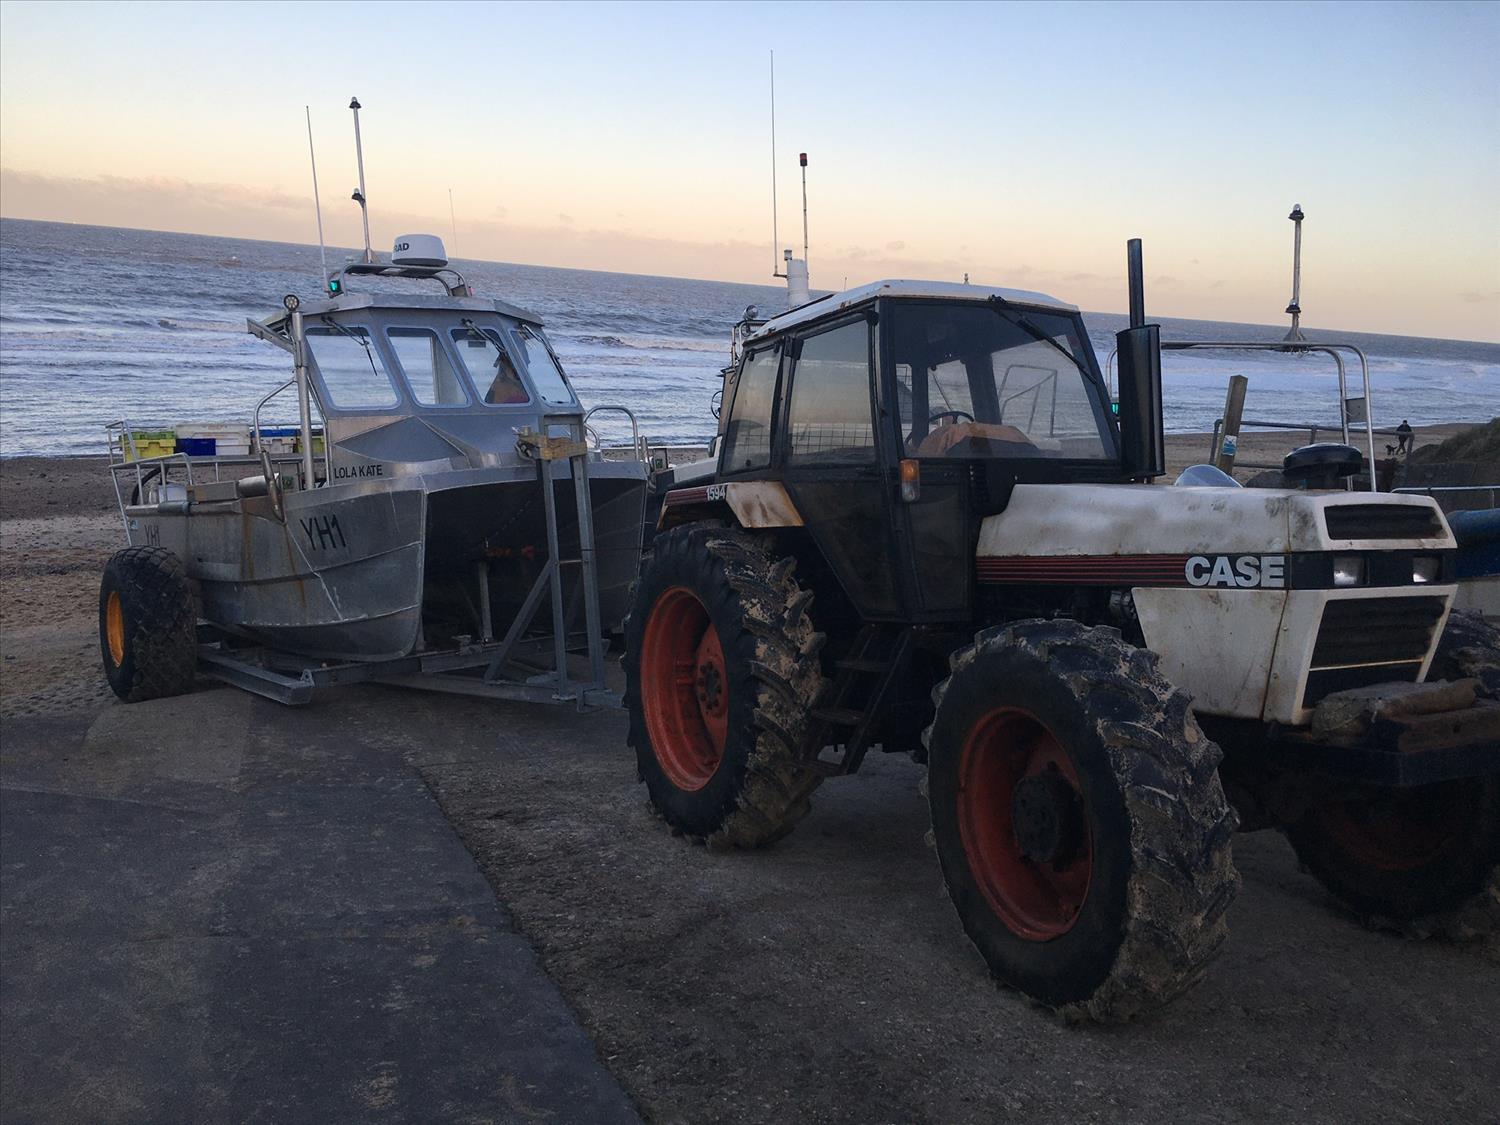 Tractors on East Runton Beach @NorfolkCoastline